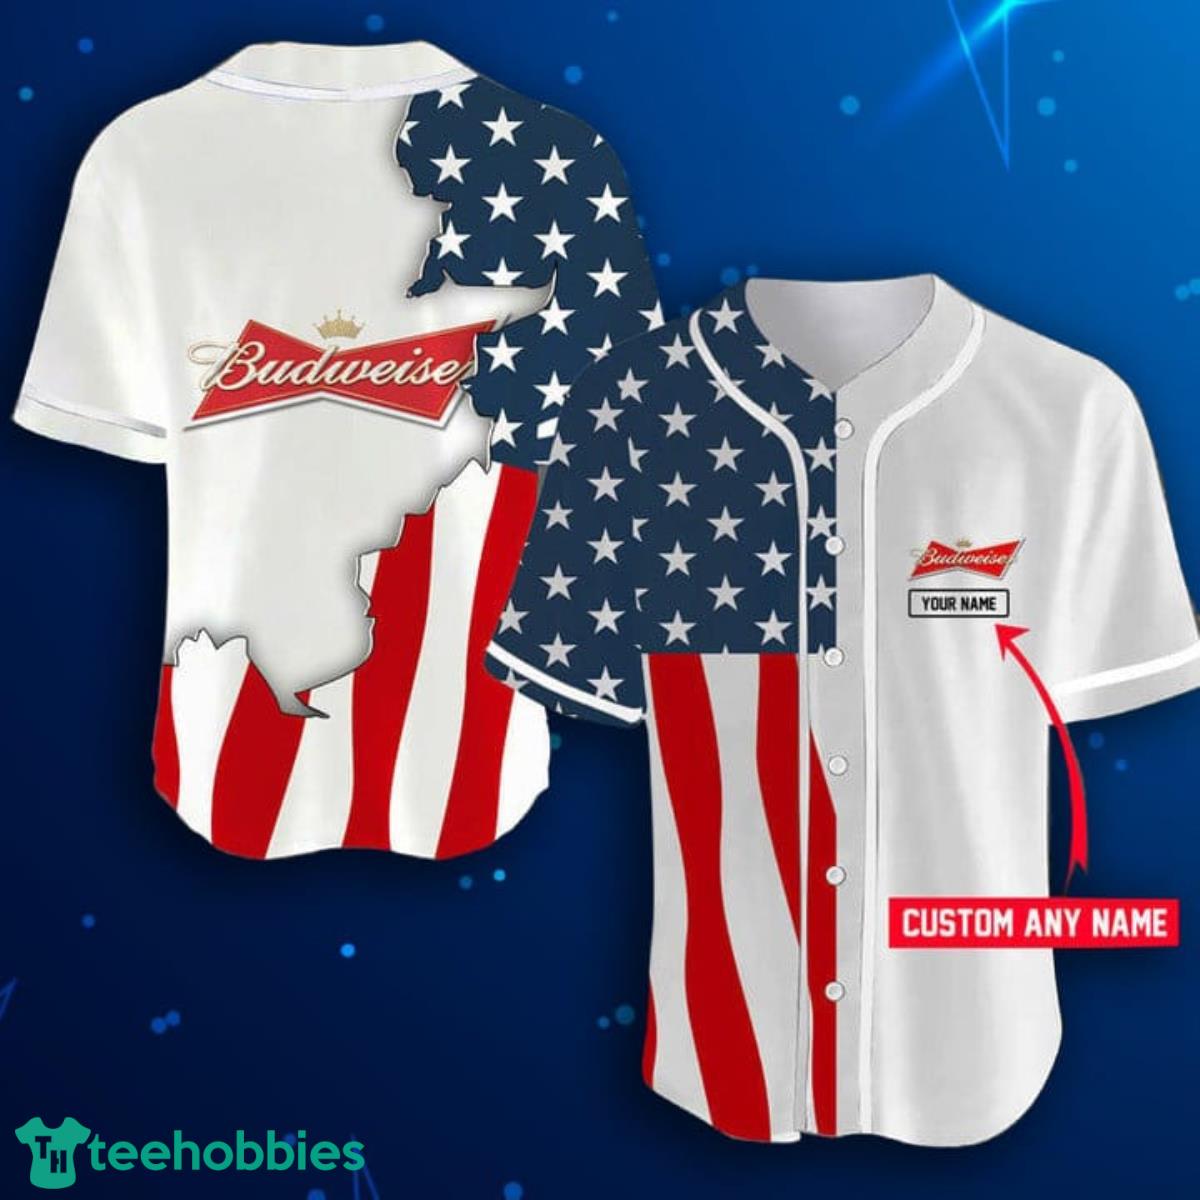 Personalized US Flag Budweiser Baseball Jersey Shirt Product Photo 1